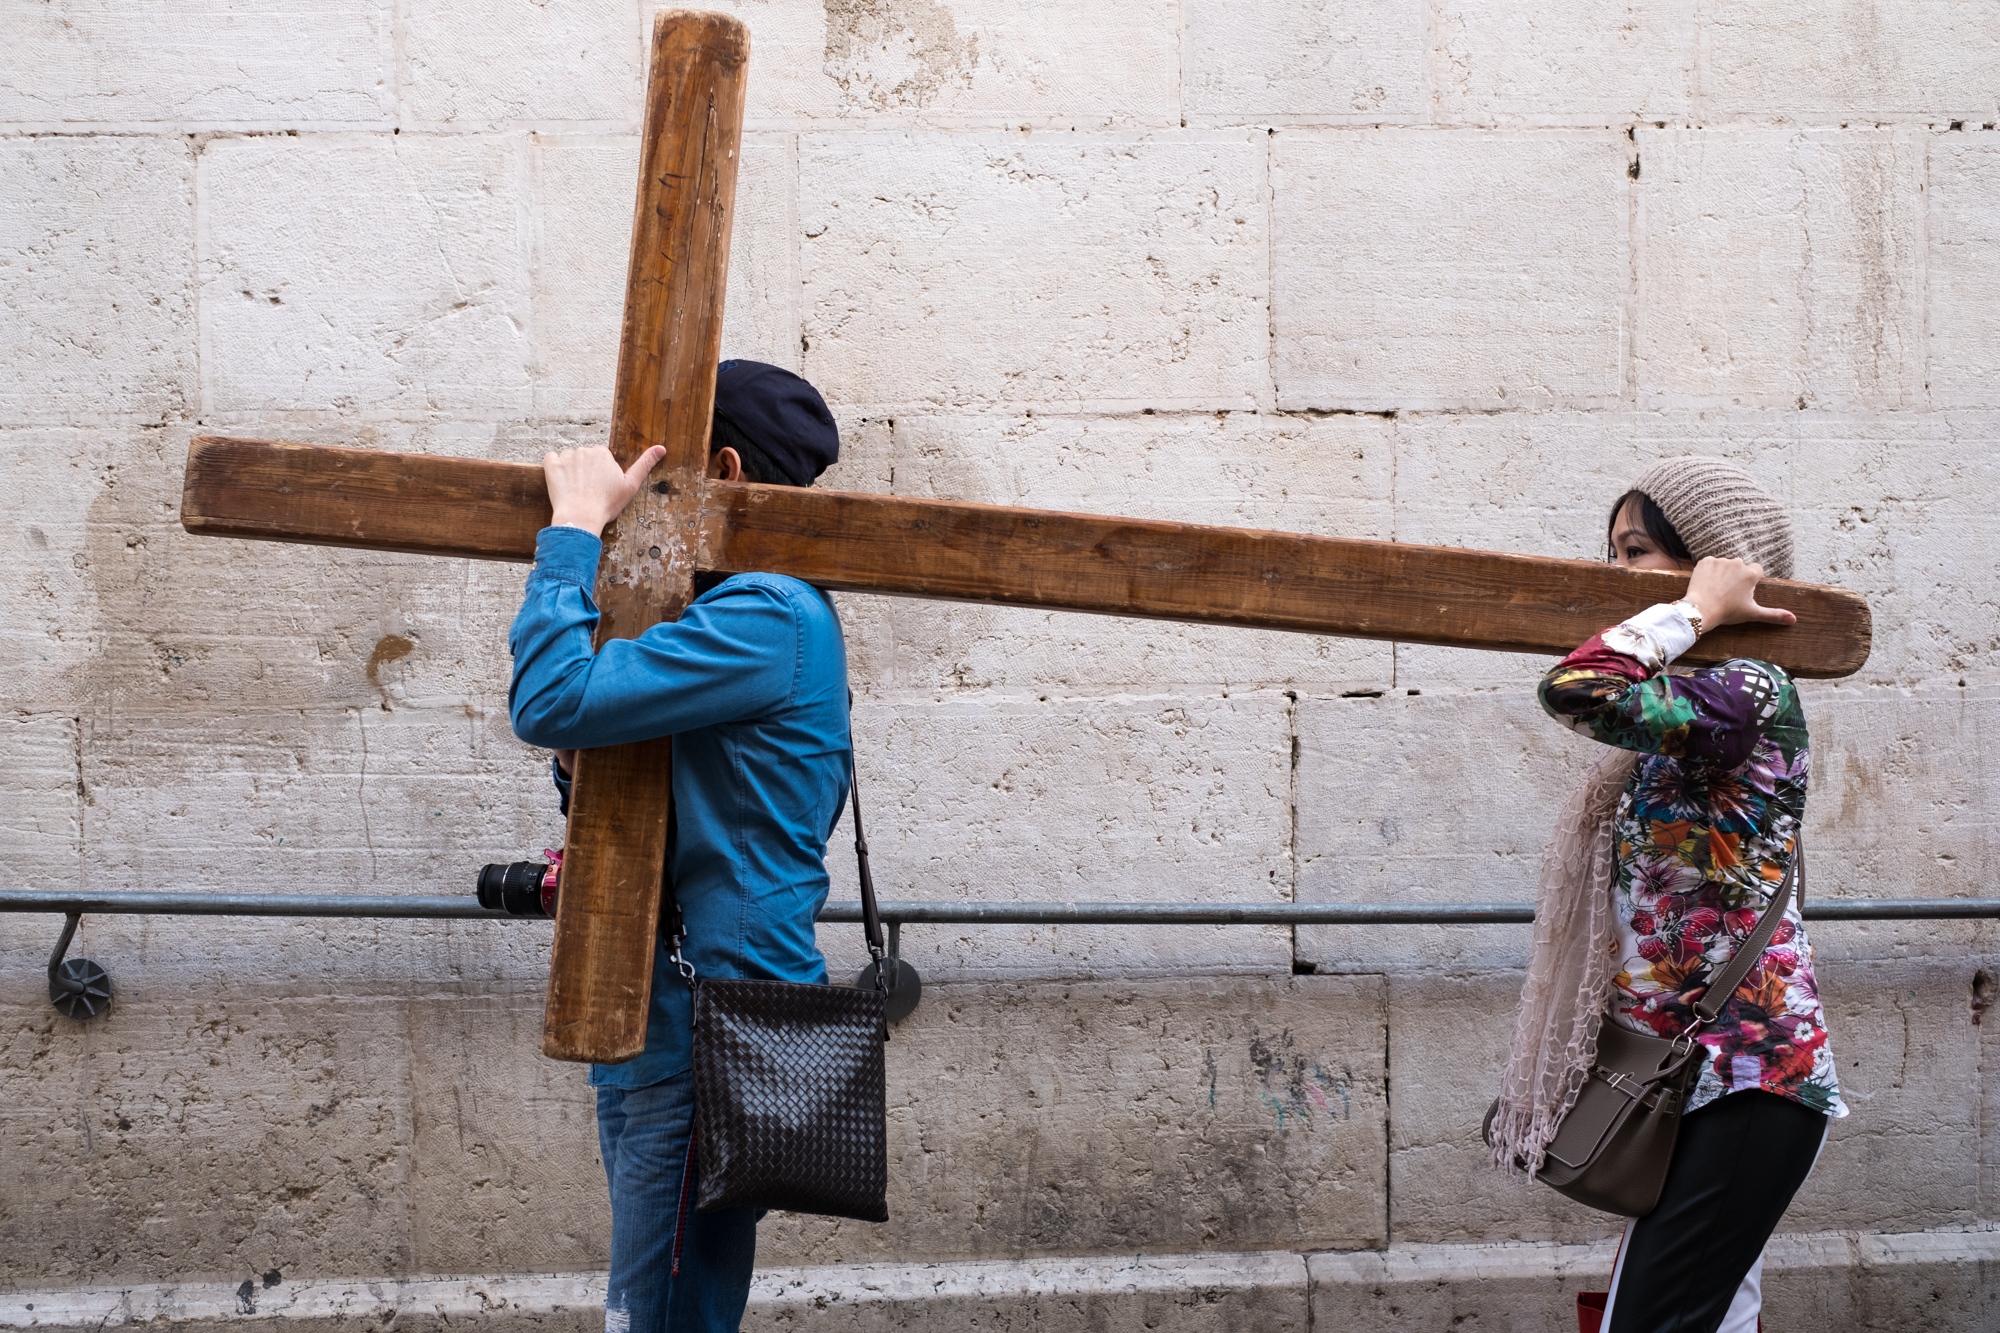 Pilgrims shoulder a cross as they follow the Via Dolorosa.